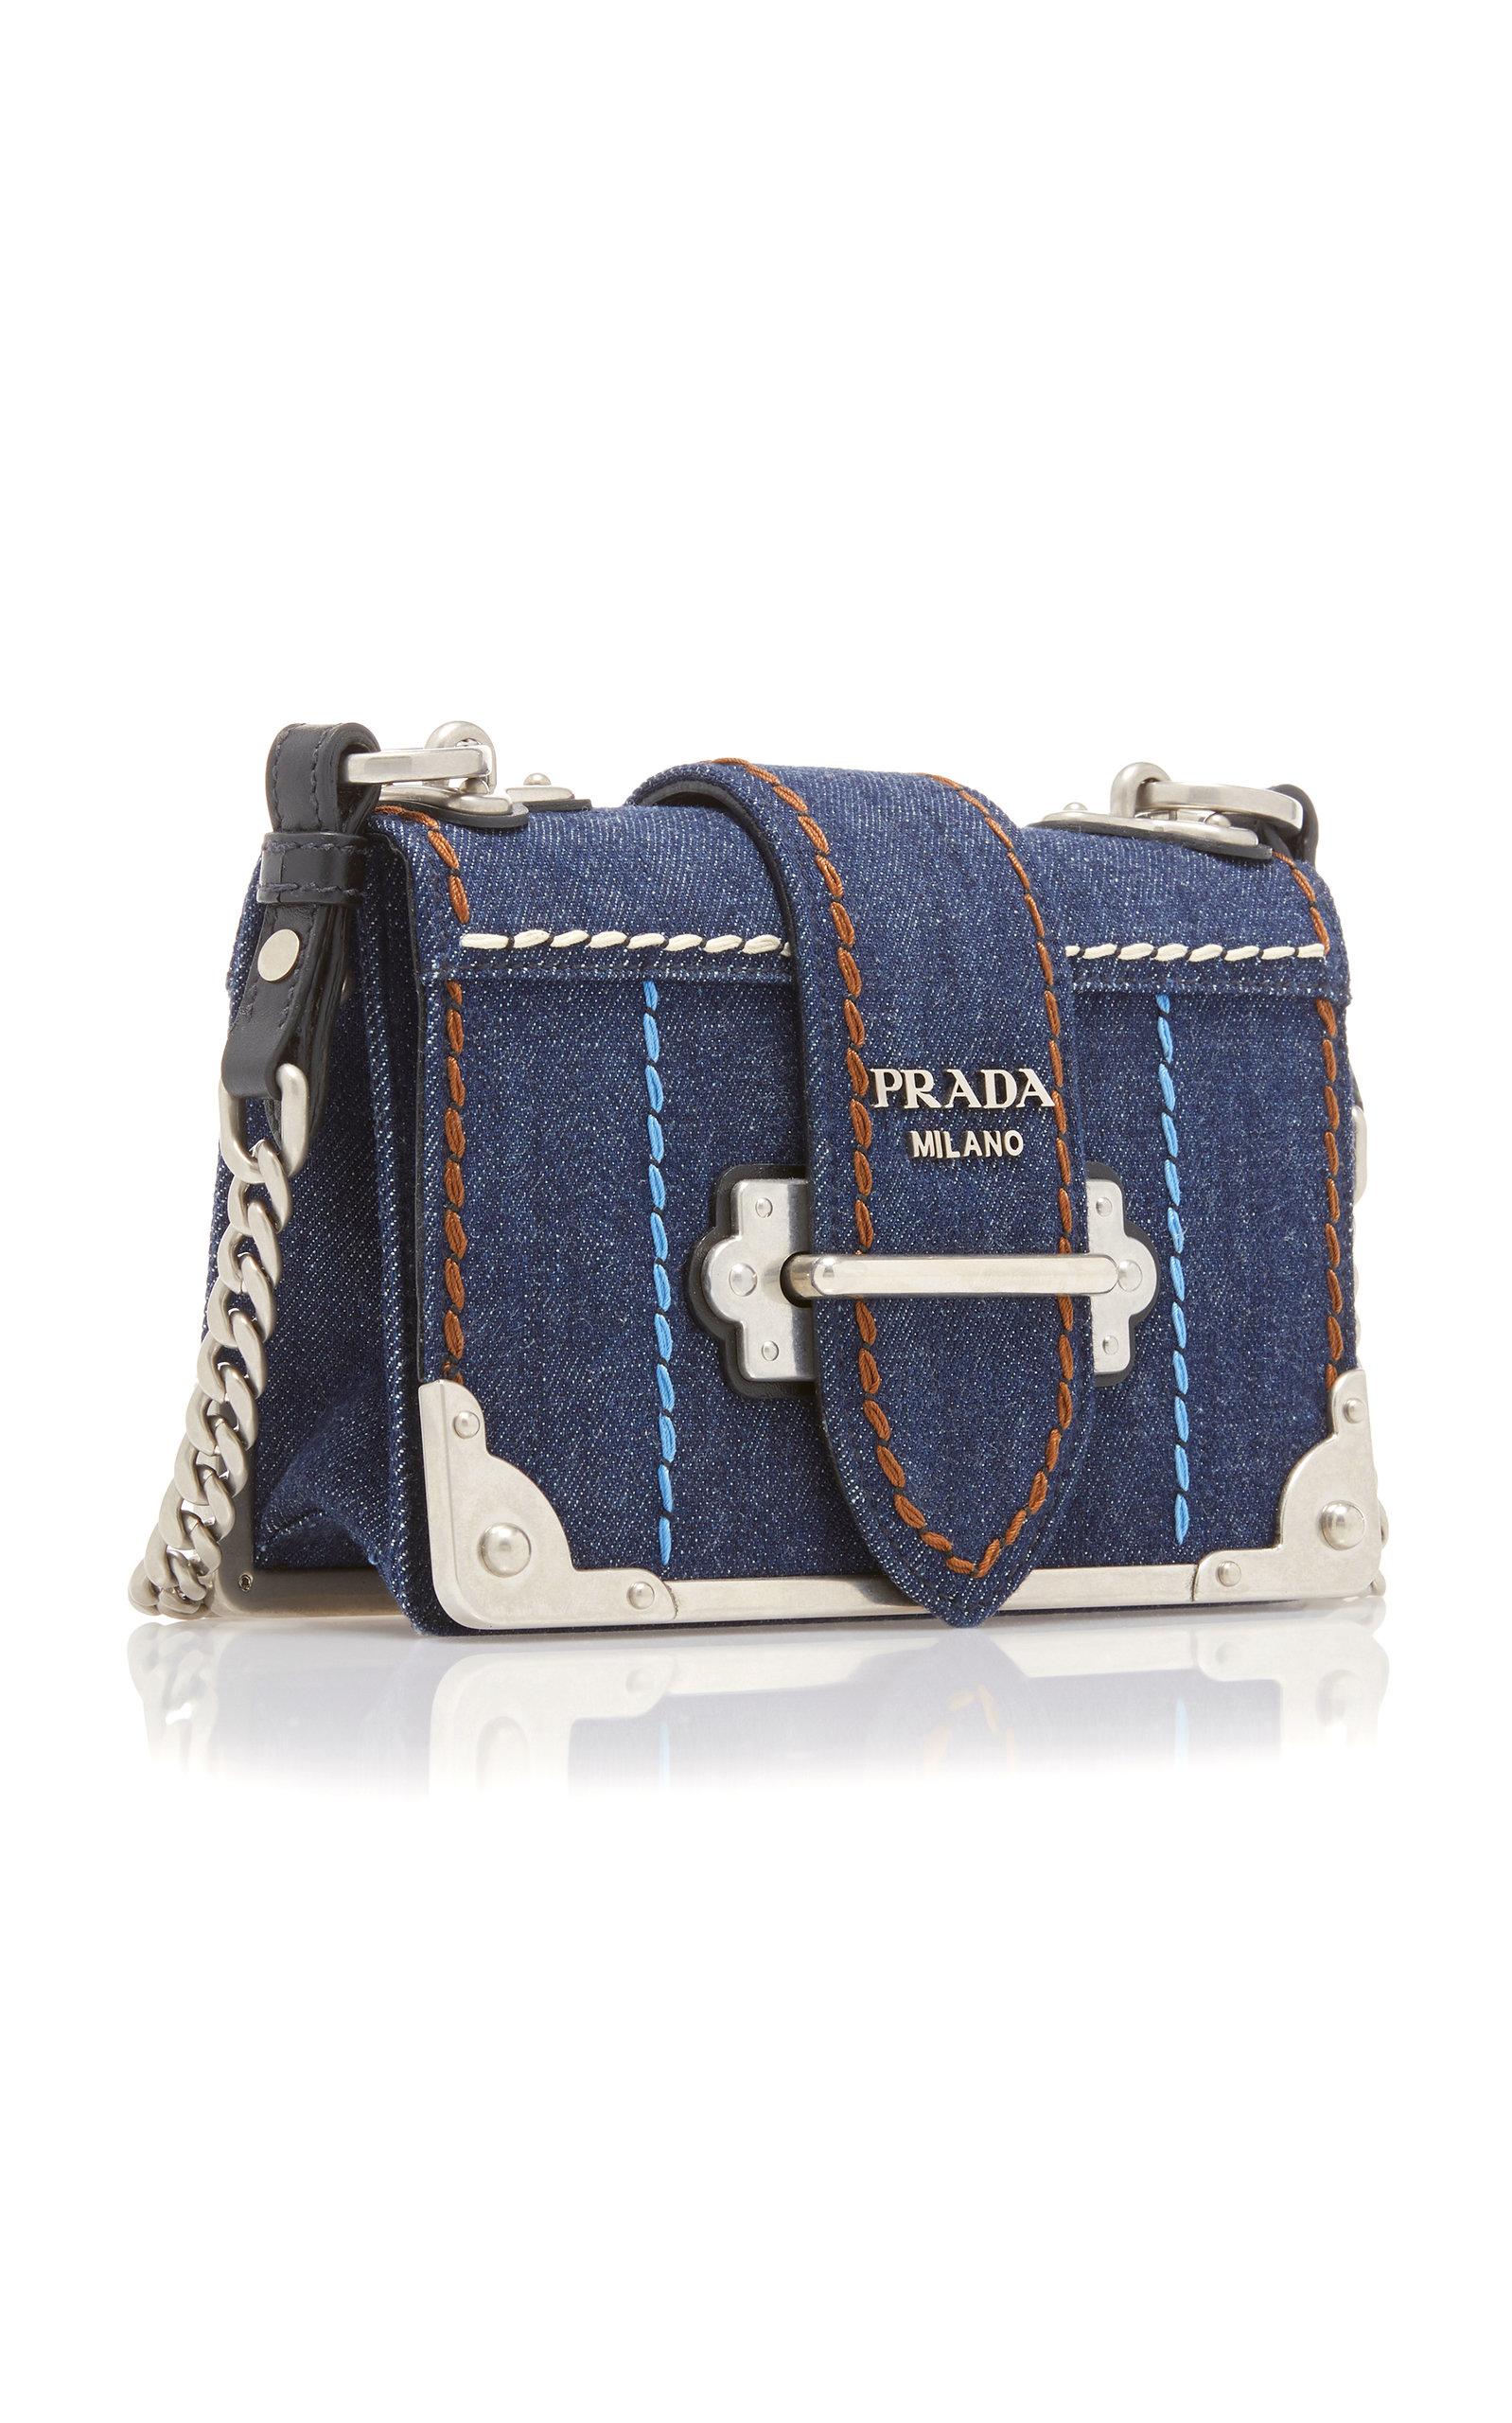 Prada Cahier Crossbody Bag City Calf and Saffiano Leather Small is